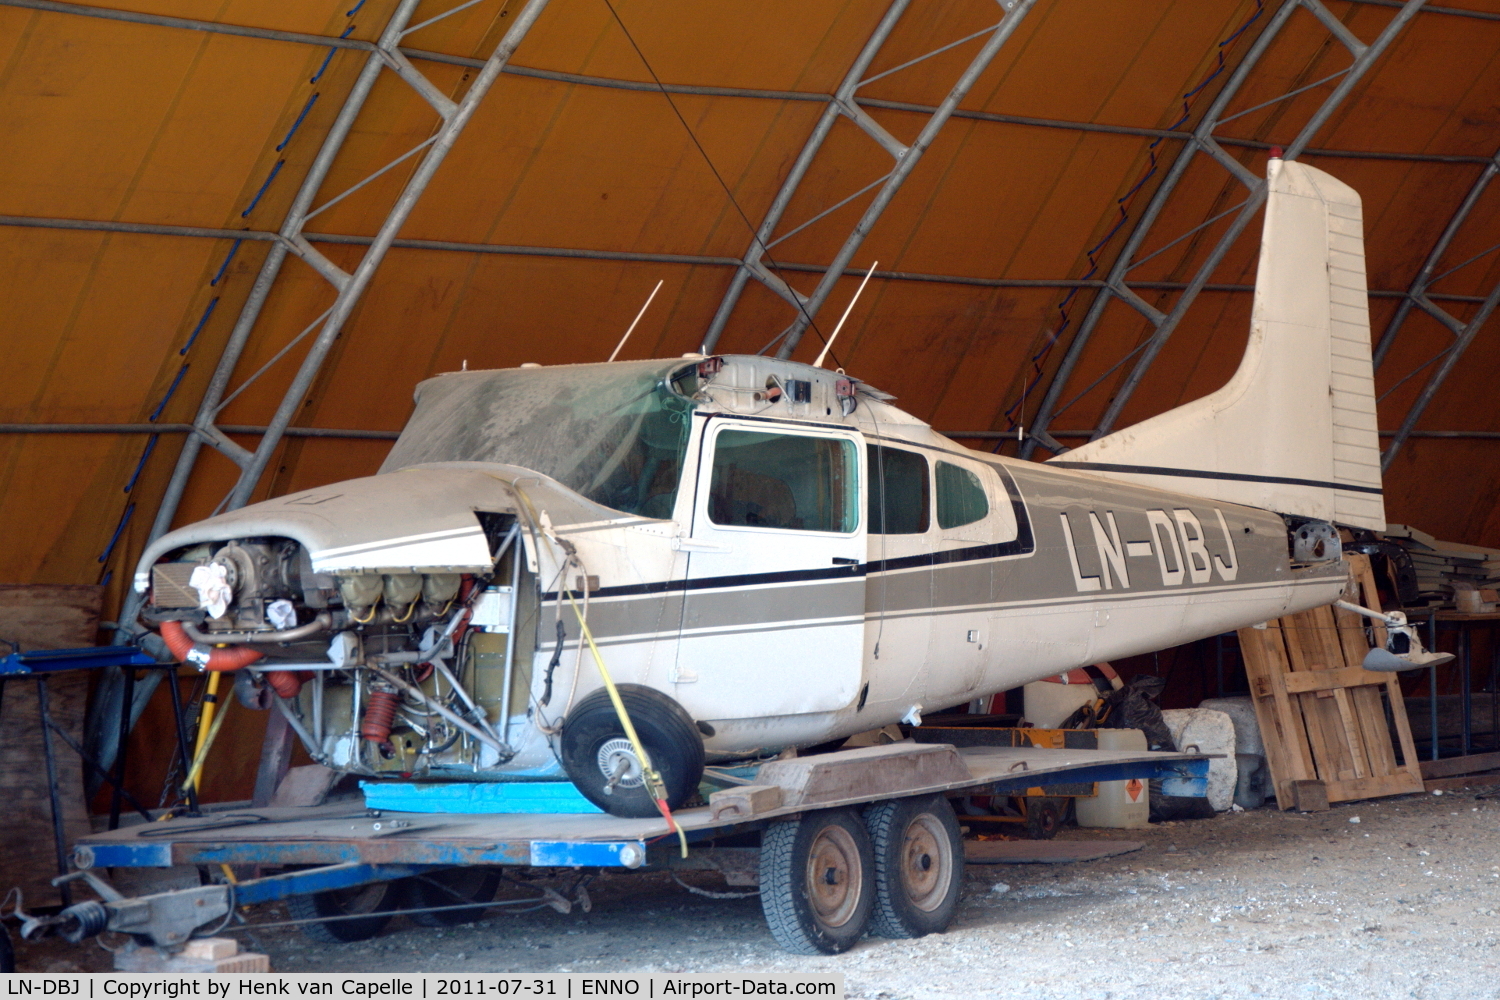 LN-DBJ, 1977 Cessna A185F Skywagon 185 C/N 185-03369, Wreckage of Skywagon in a hangar at Notodden airfield. It was damaged in a hard landing on 2009-03-14 when flown by a famous Norwegian downhill skier.